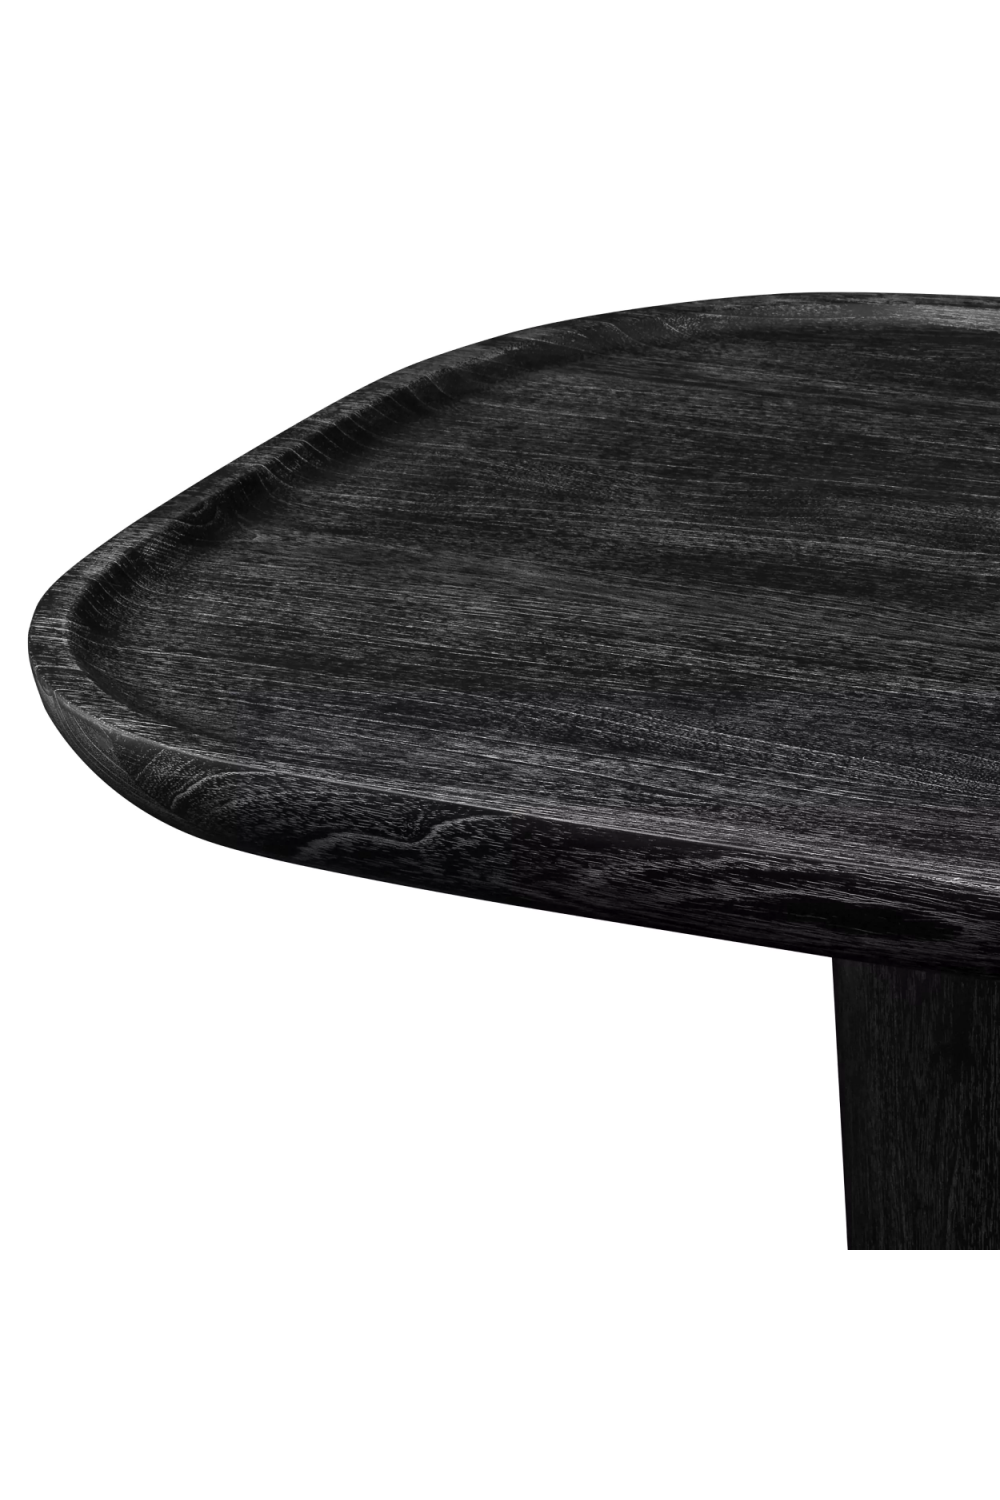 Charcoal Gray Coffee Table | Eichholtz Rouault | Oroa.com